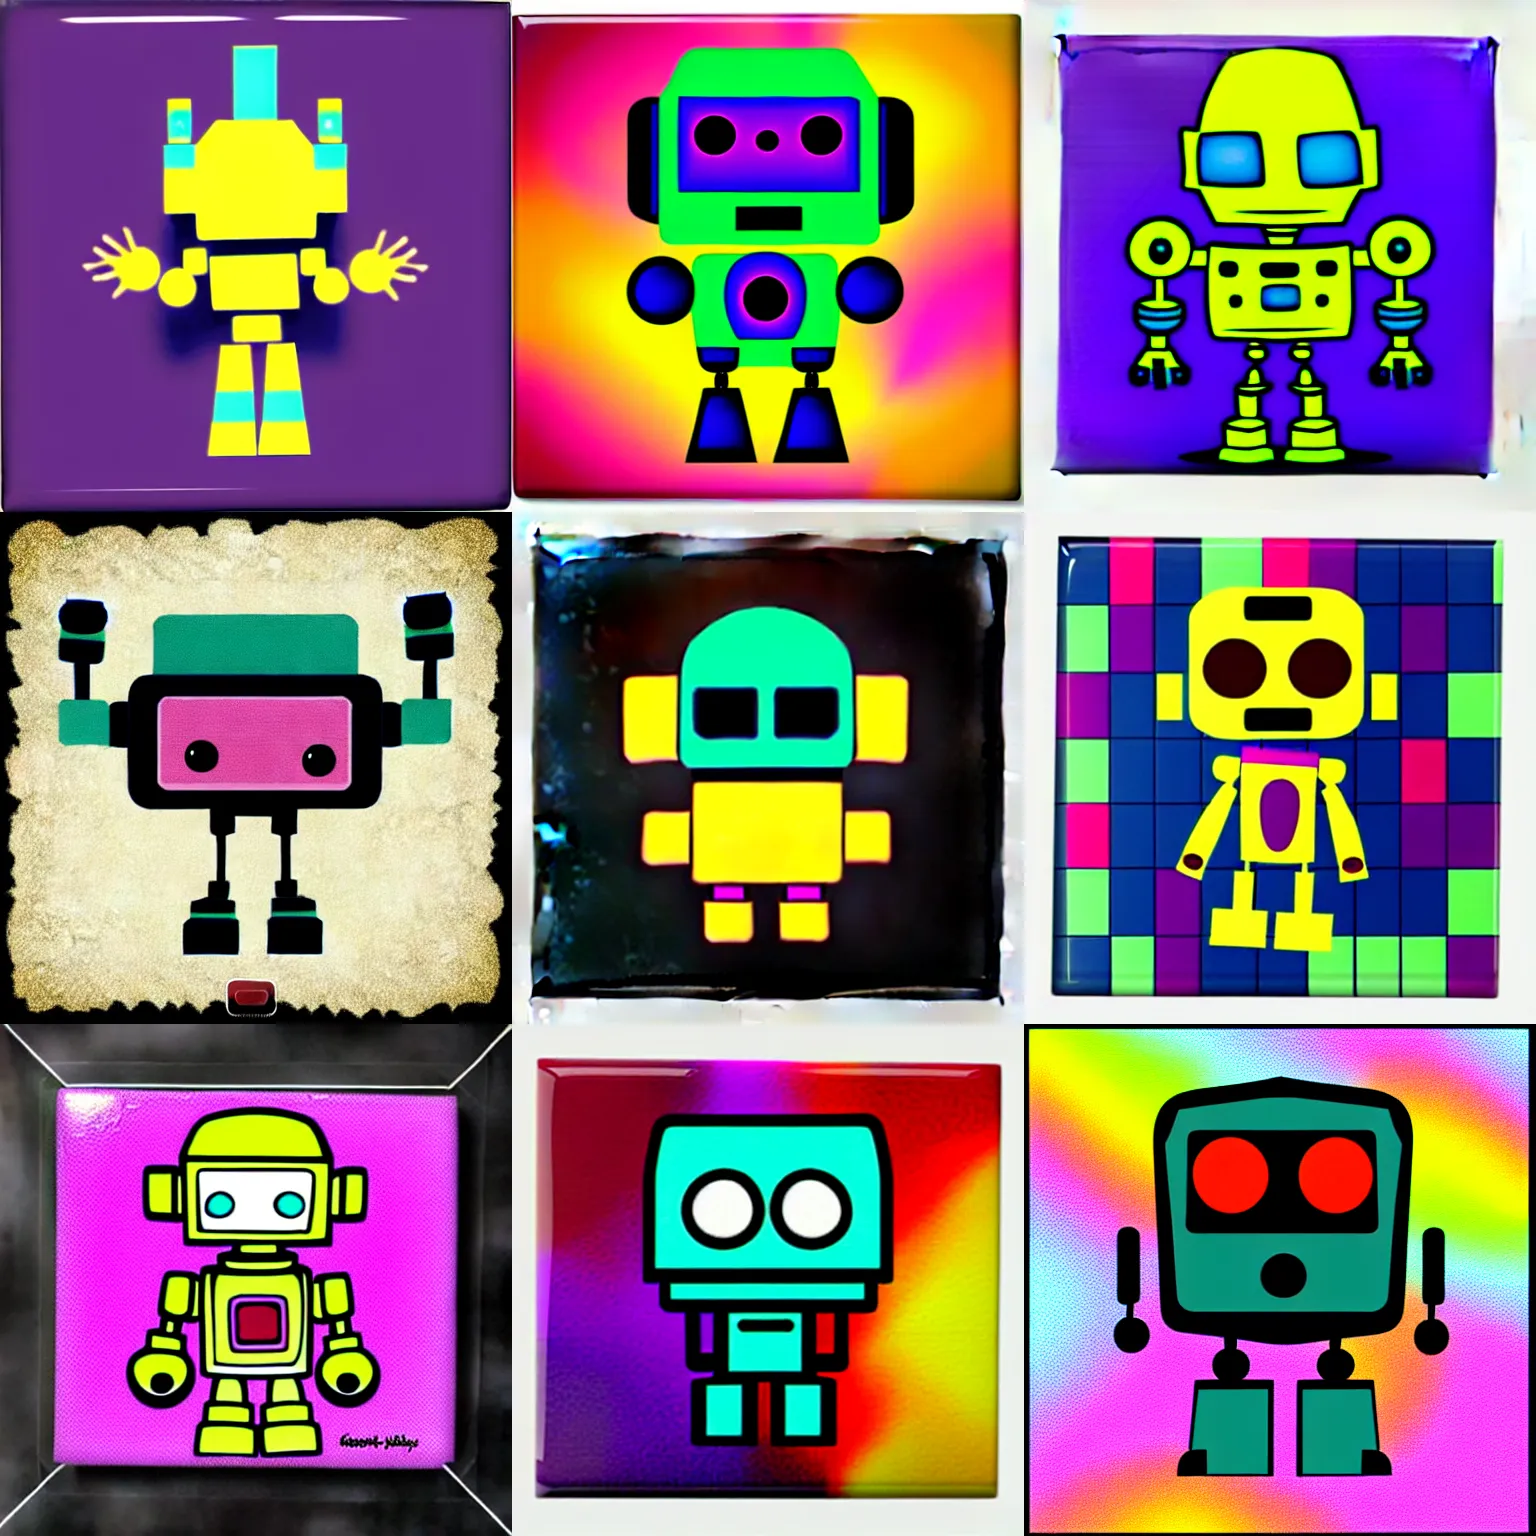 Prompt: Chibi Cute Macabre Robot as a colorful fancy square tile